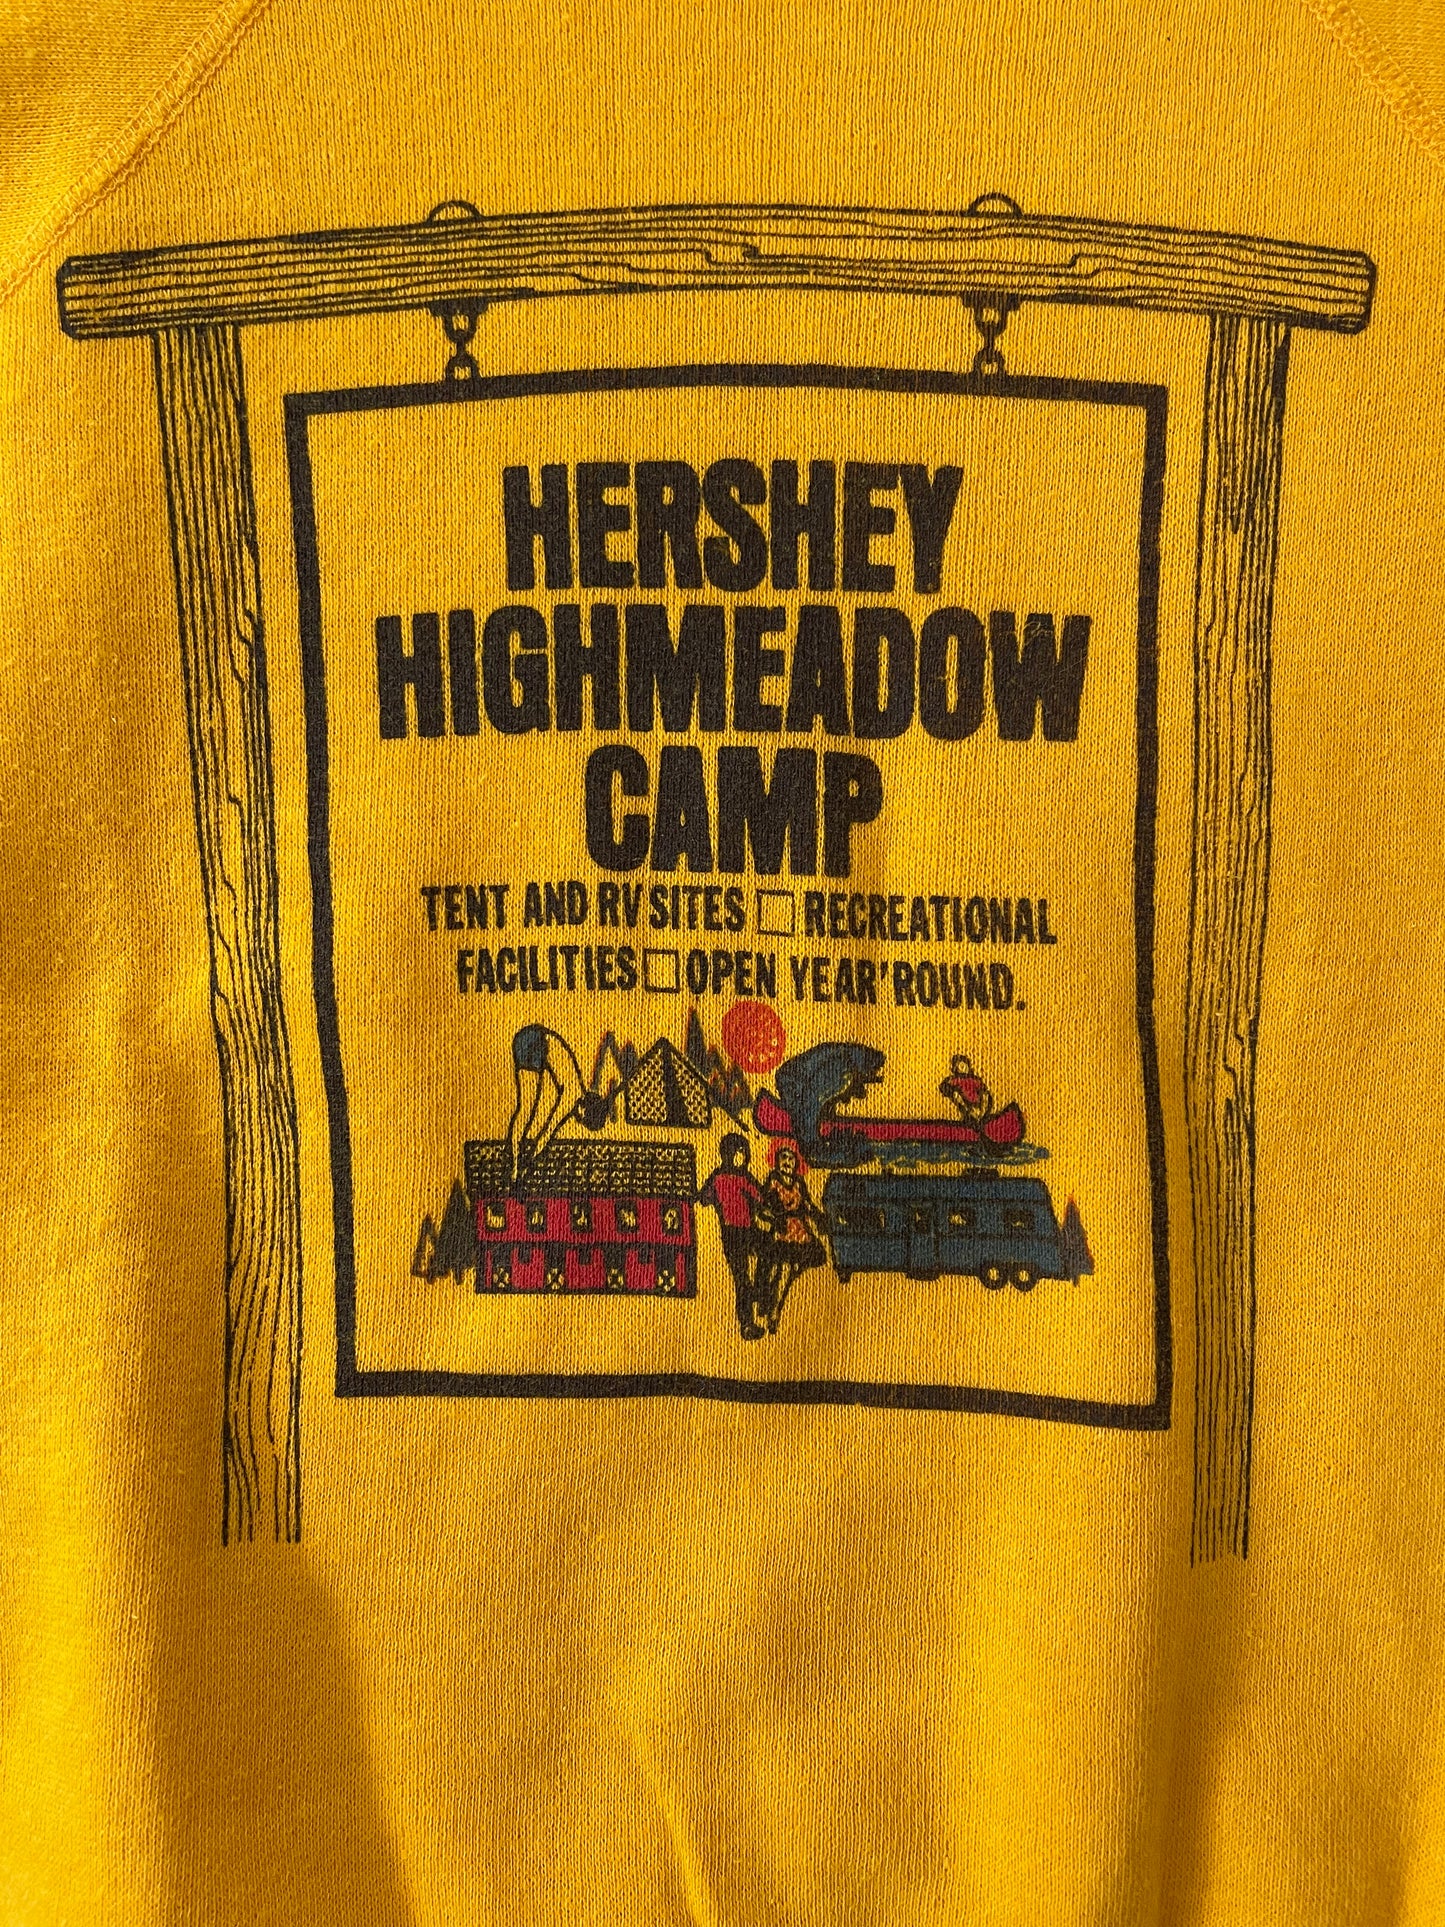 70s Hersey Highmeadow Camp Ground Sweatshirt